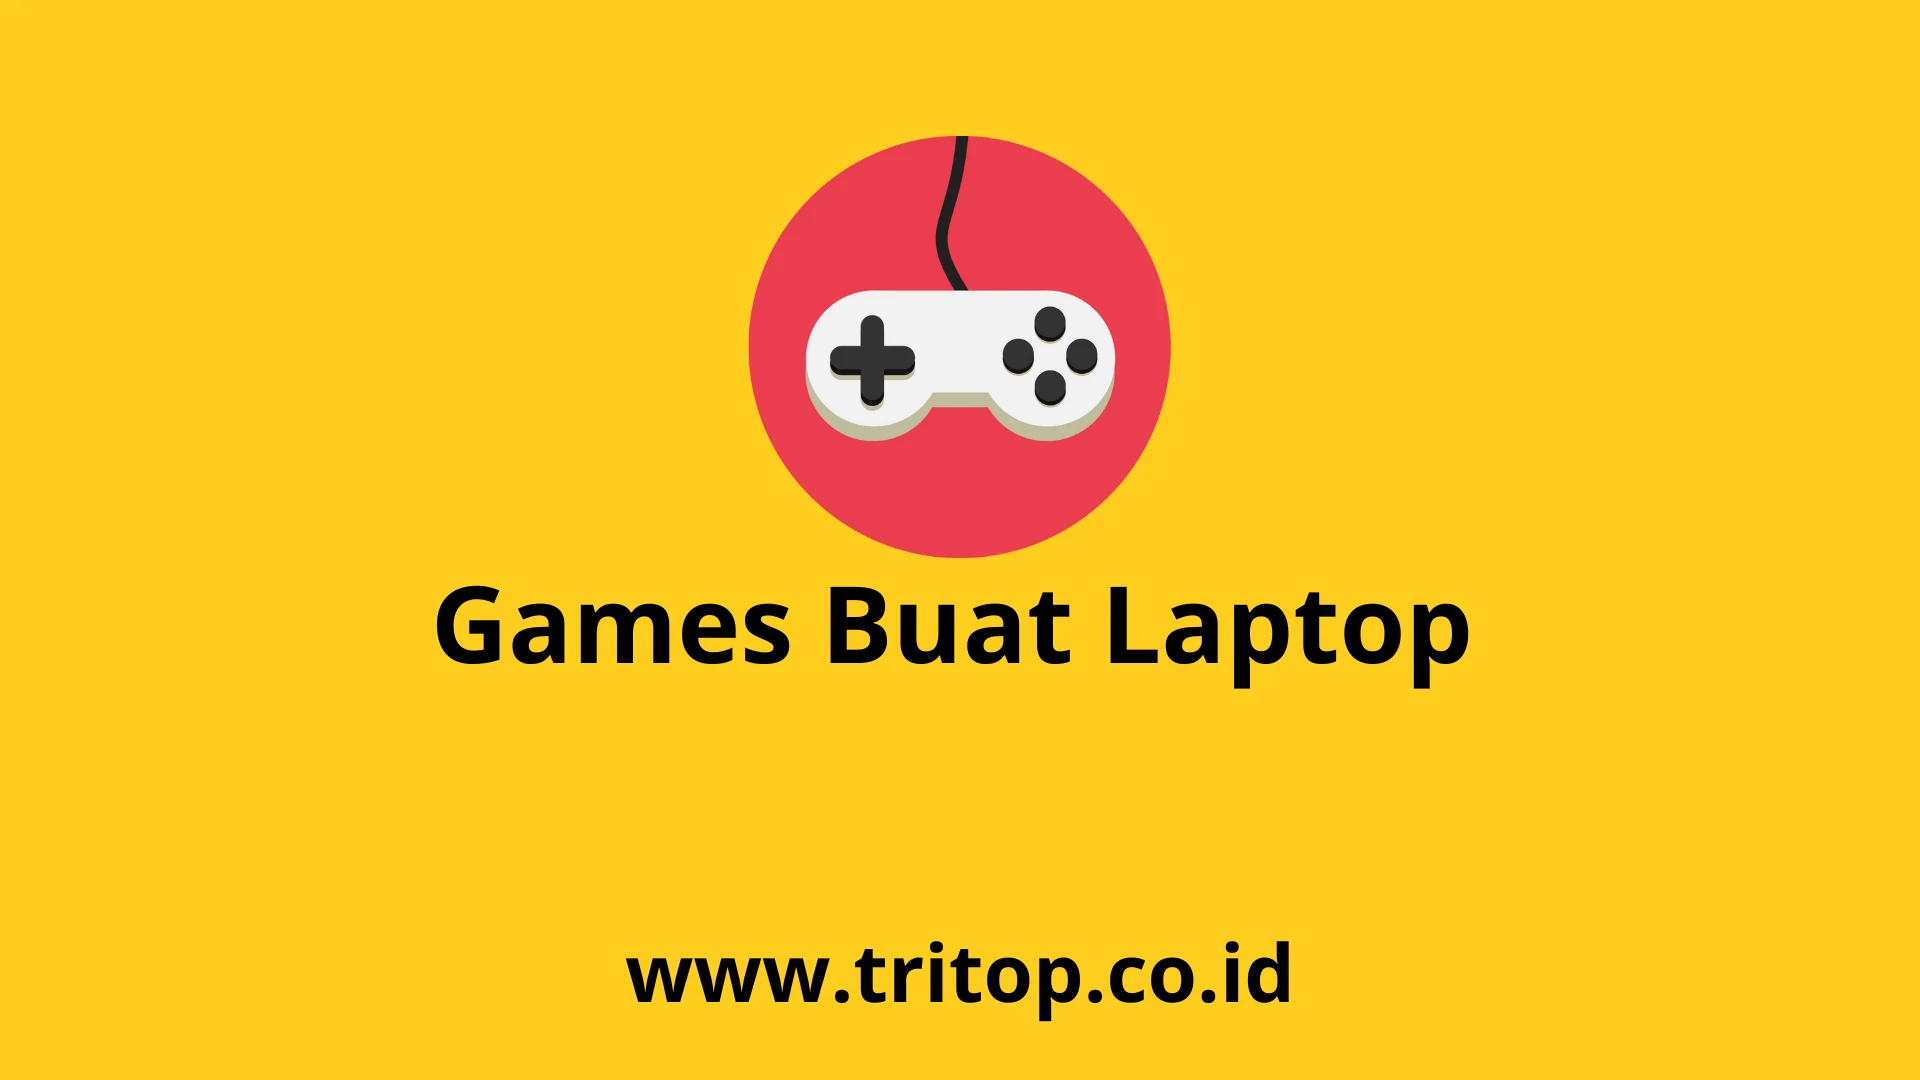 Games Buat Laptop Tritop.co.id